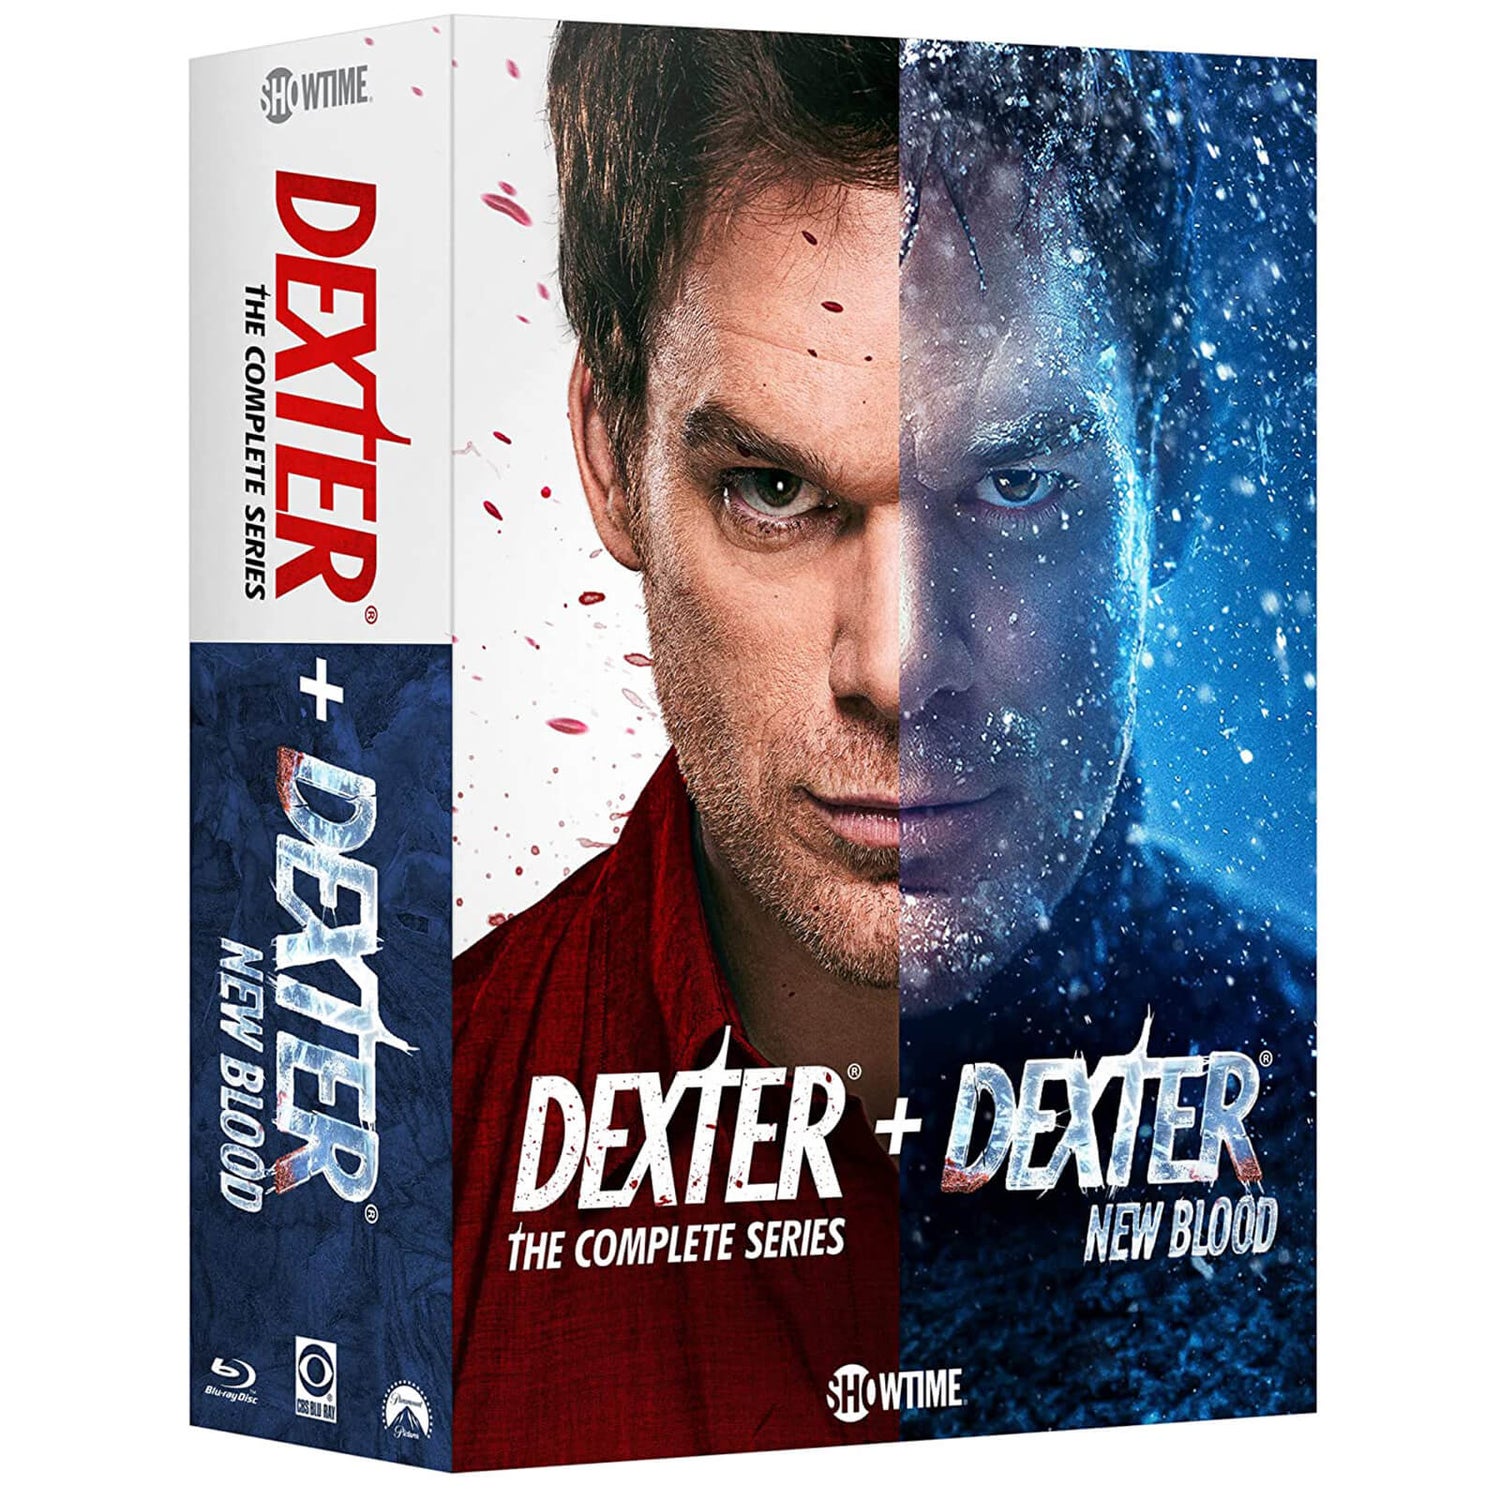 Dexter: The Complete Series & Dexter: New Blood